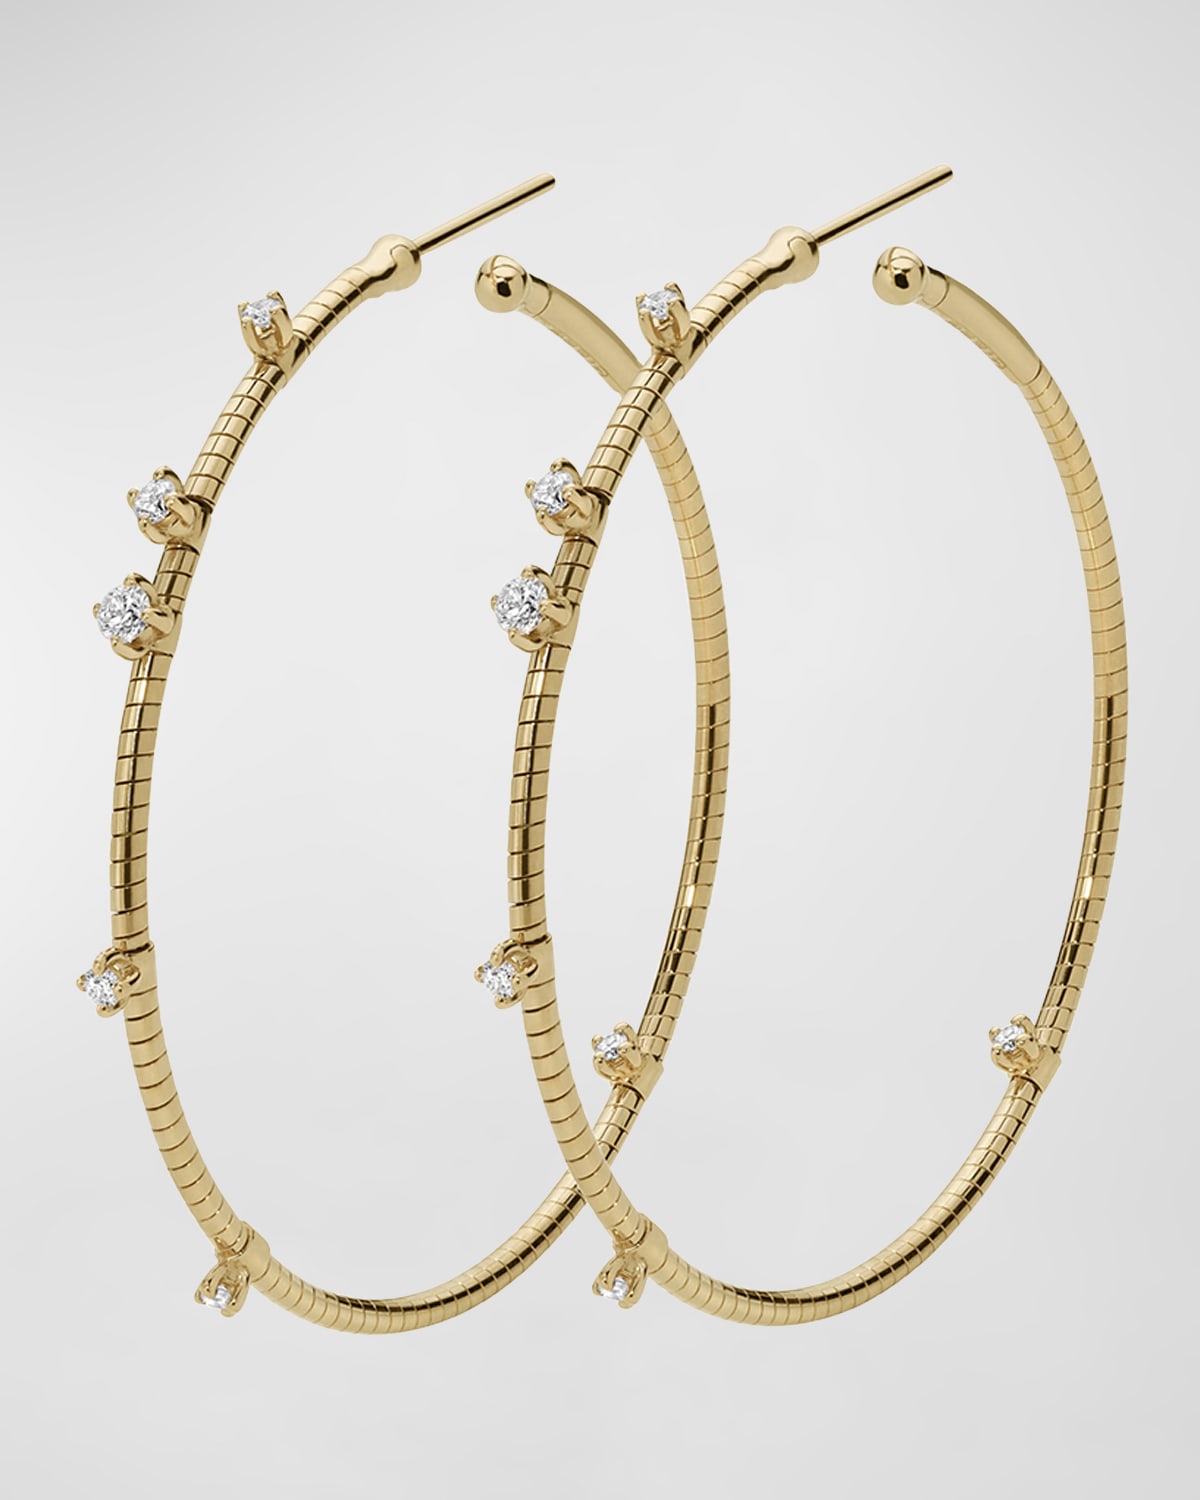 18k Yellow Gold Diamond Hoop Earrings